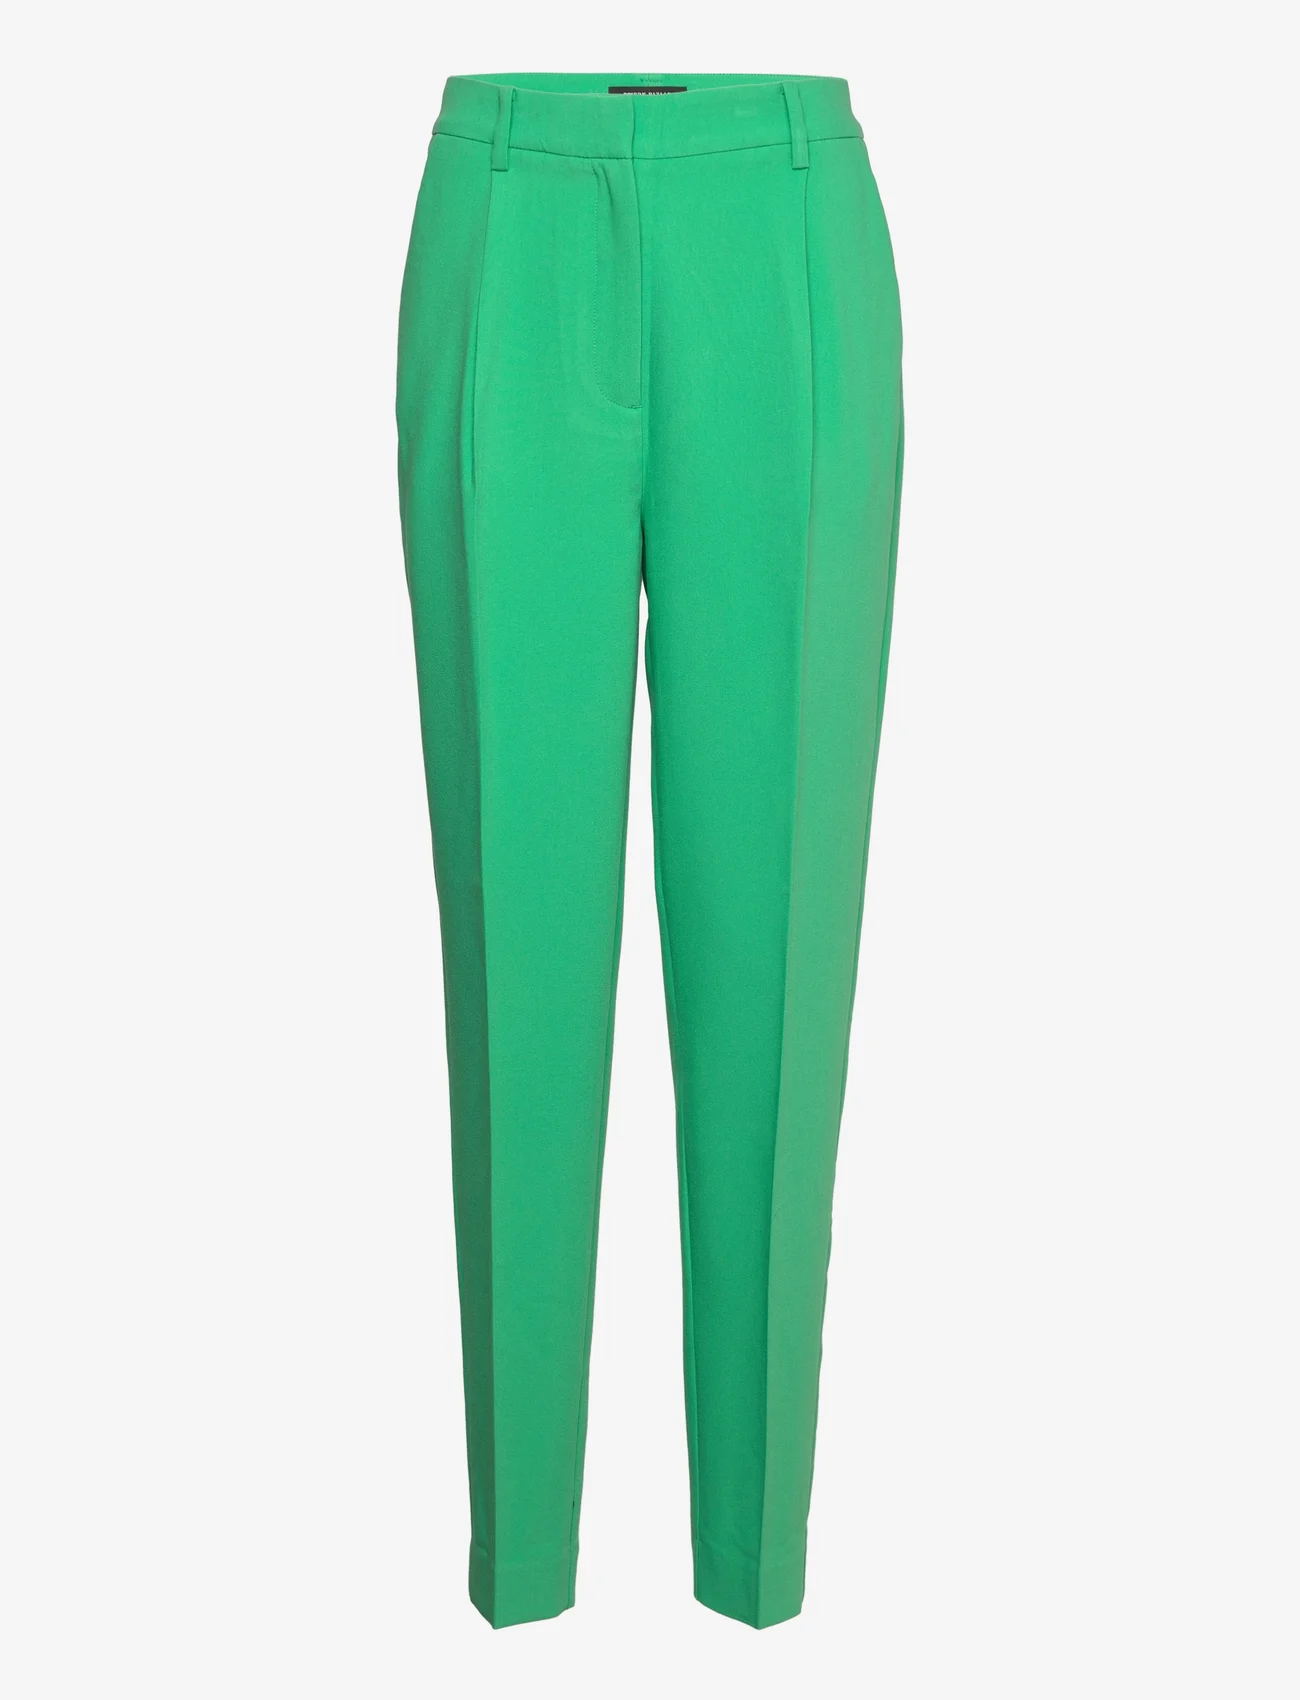 Bruuns Bazaar - CindySus Ciry pants - kostymbyxor - bright green - 0